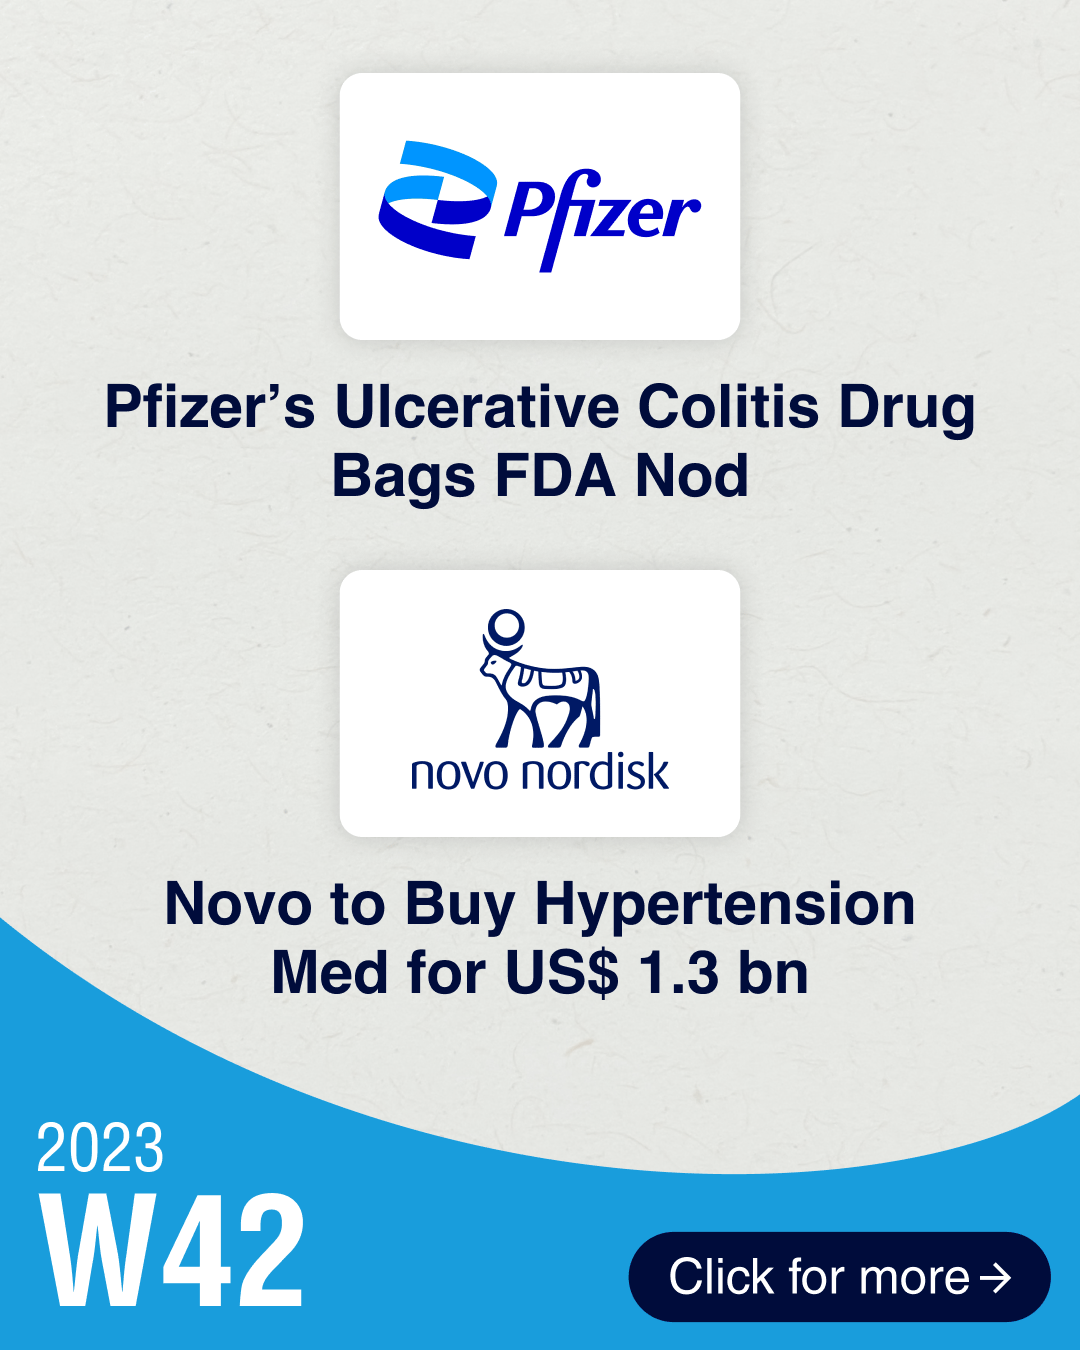 Pfizer’s ulcerative colitis drug bags FDA nod; Novo to buy BP med for US$ 1.3 billion